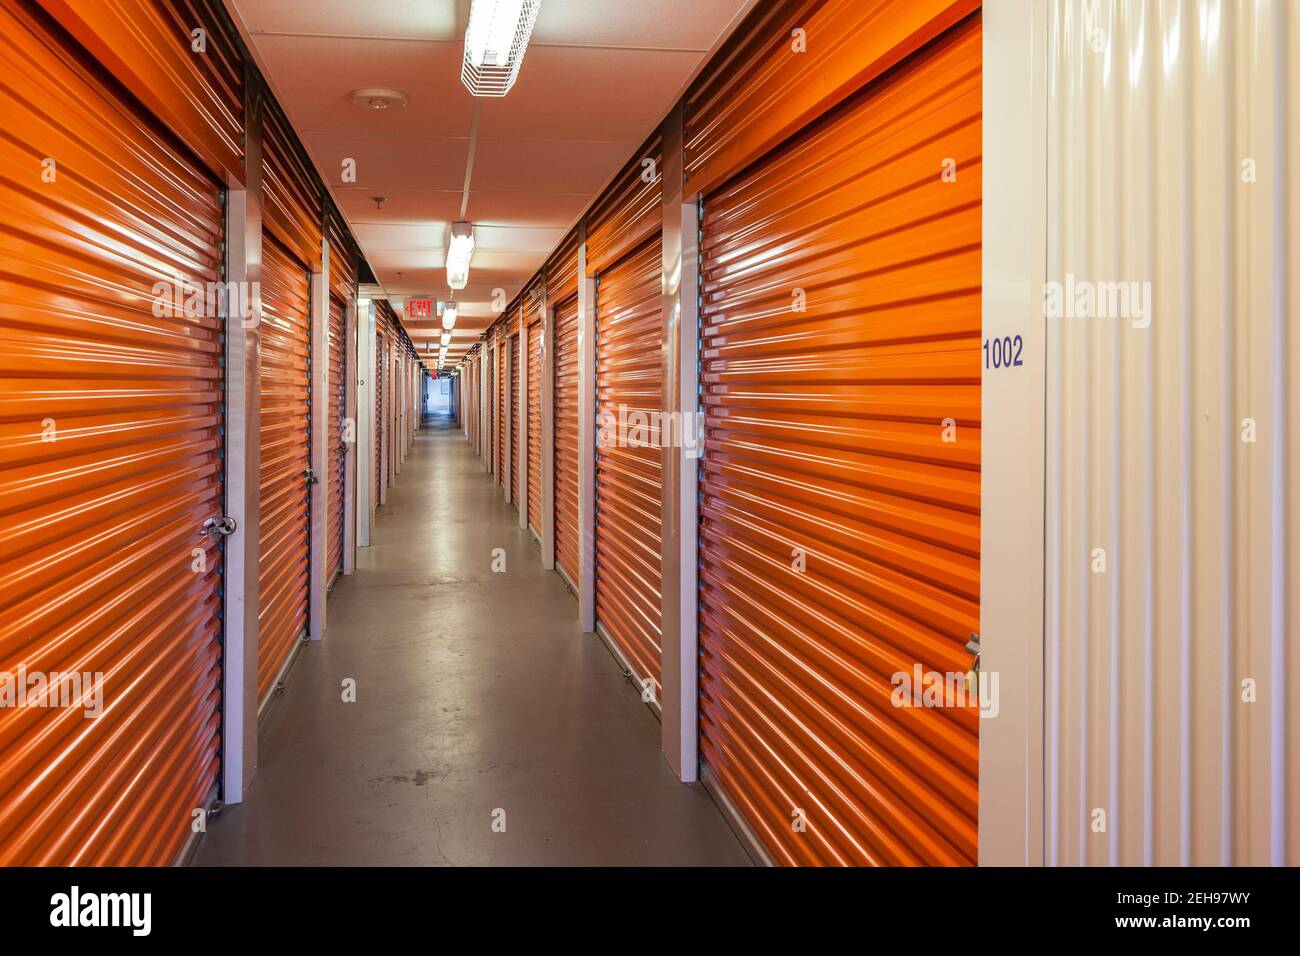 Orange interior of self storage units at an enclosed mini warehouse facility Stock Photo